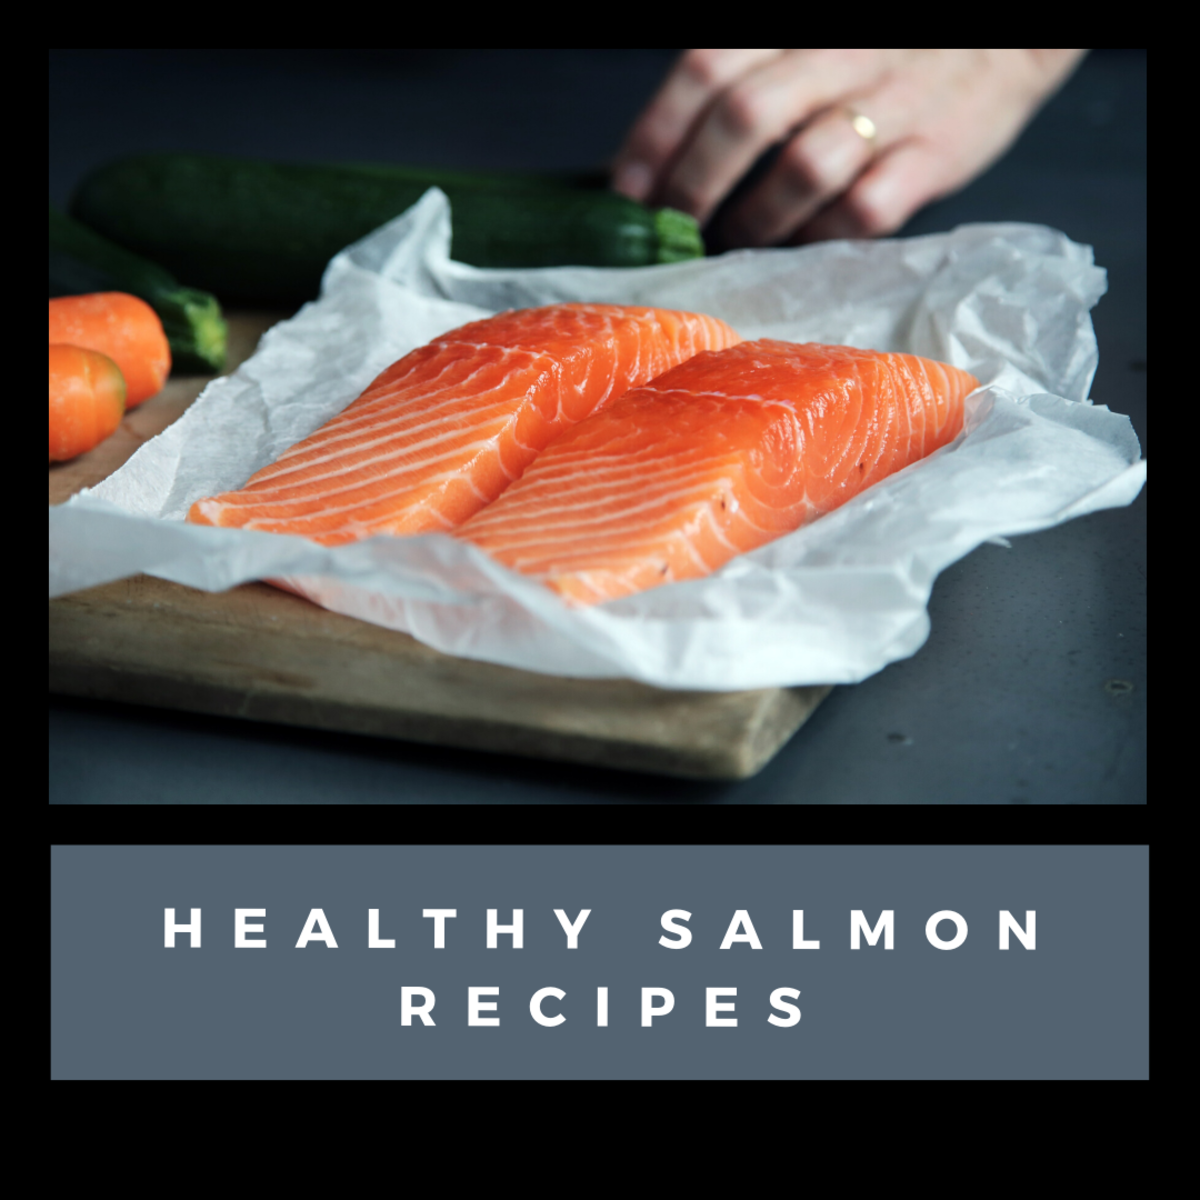 How to Make Healthy Salmon and Salmon Recipes - Delishably